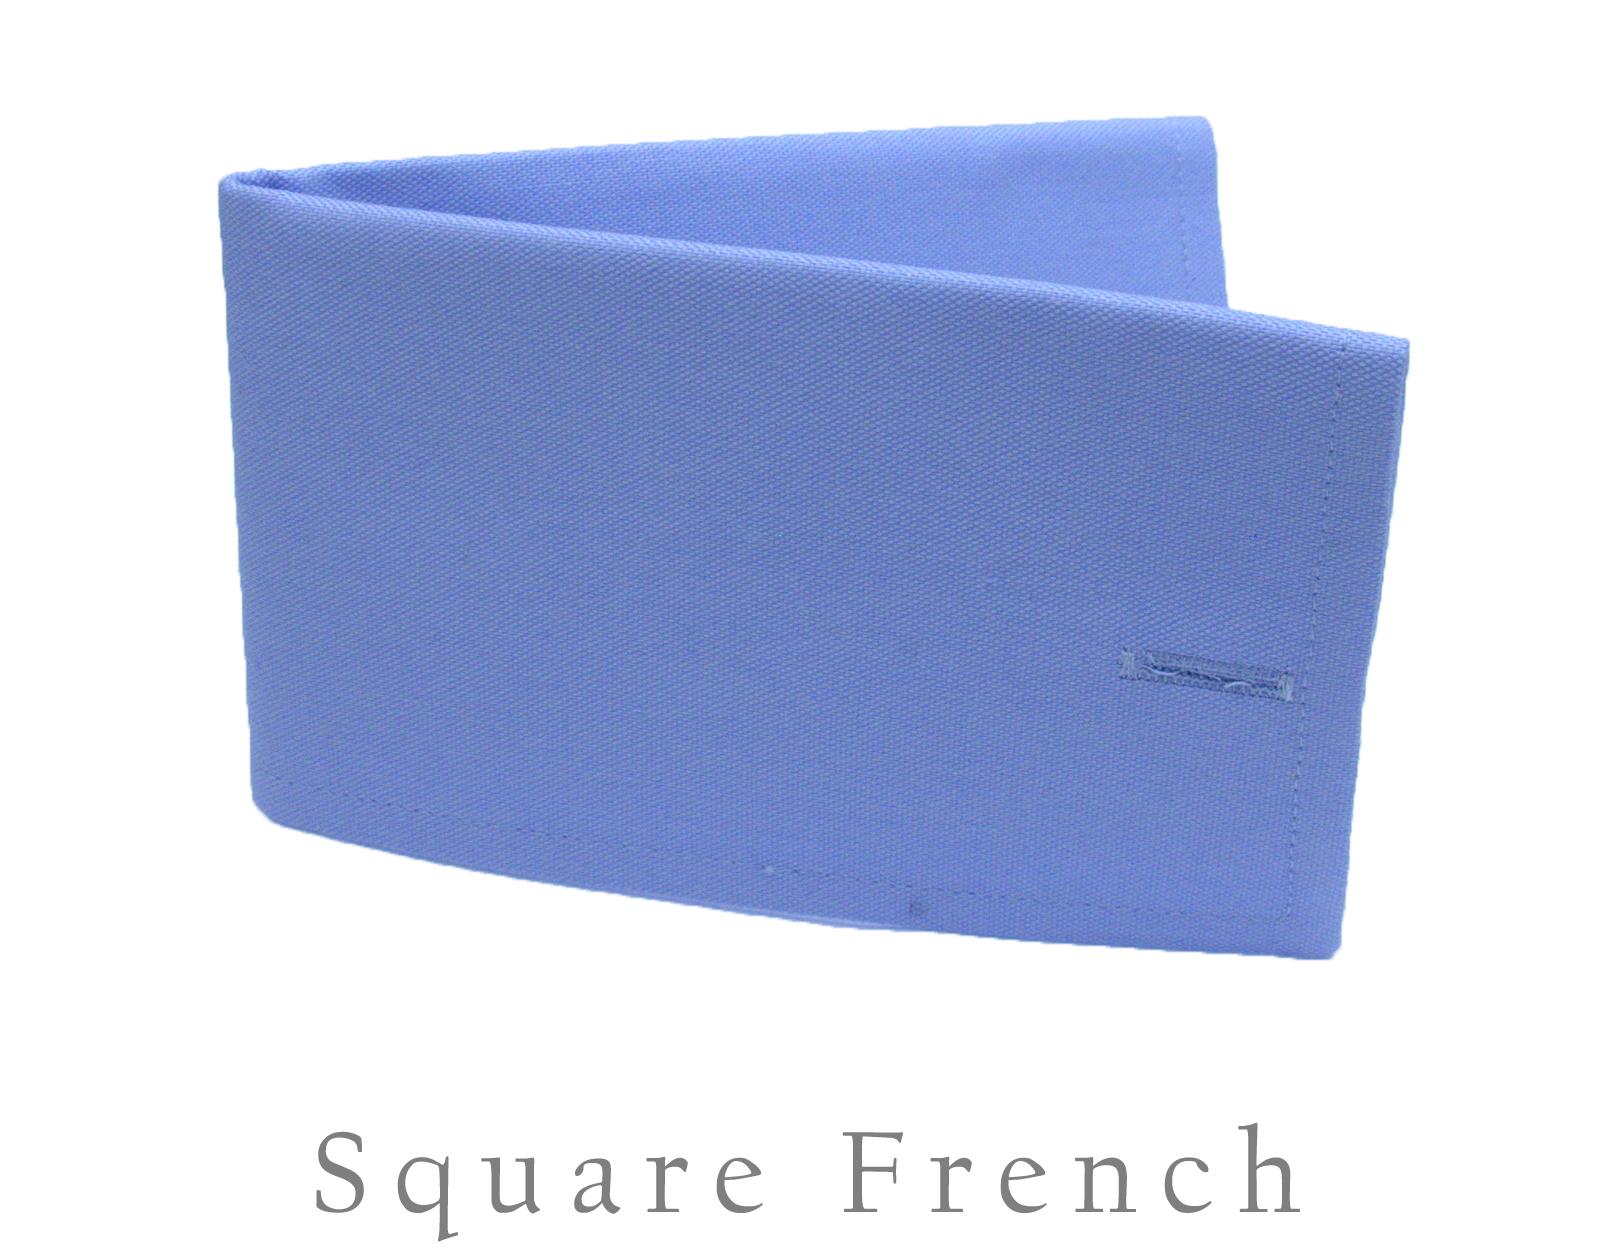 Square French Cuff.jpg